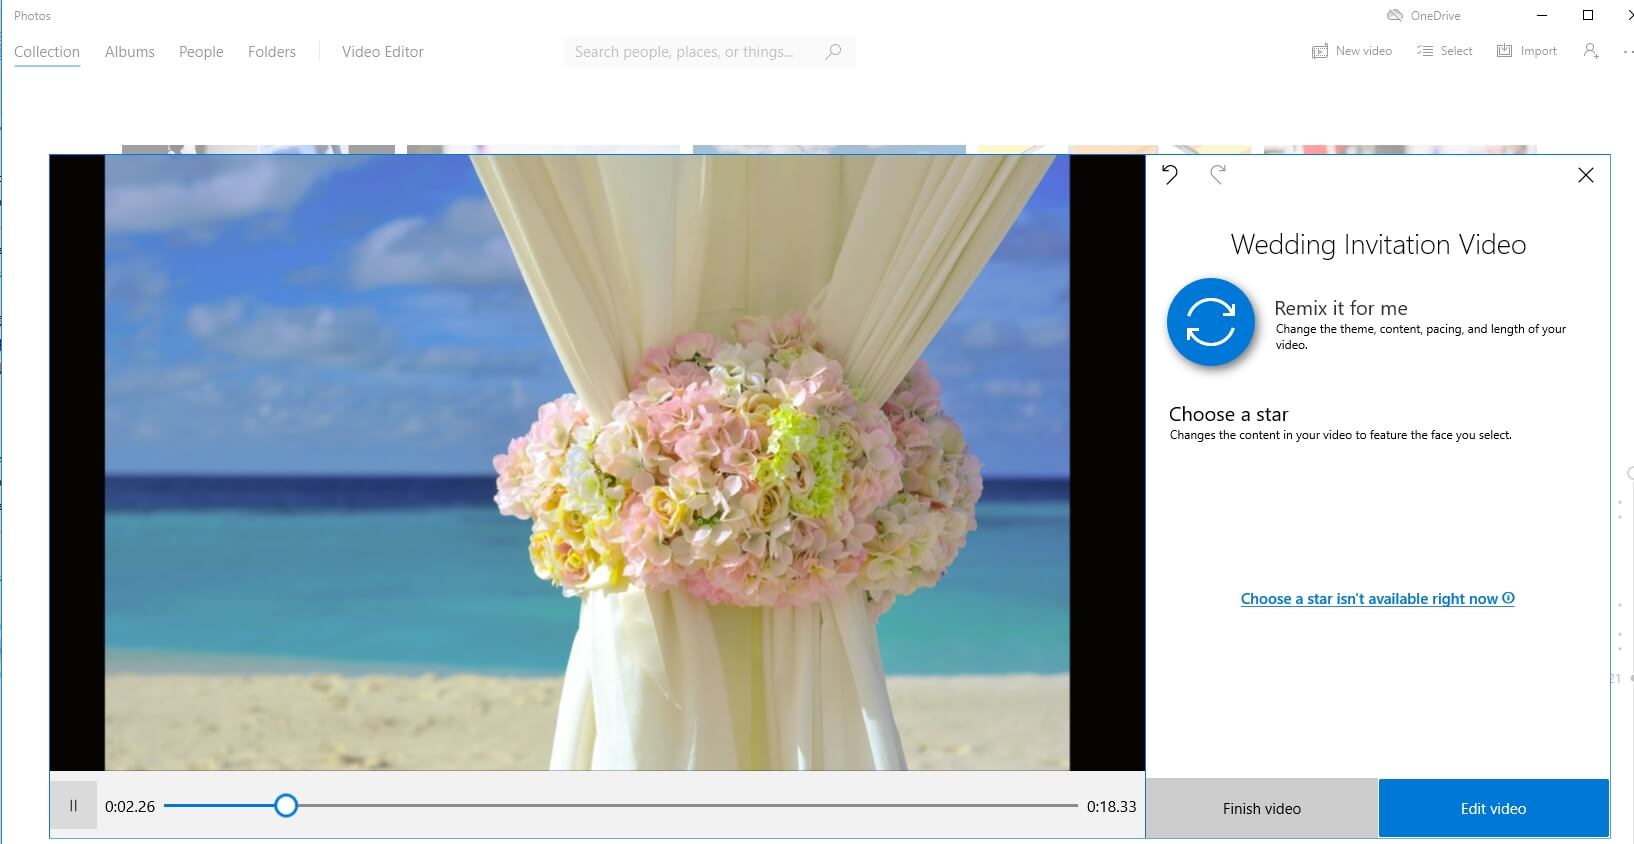 Windows 10 Photos App Wedding Invitation Video Editing